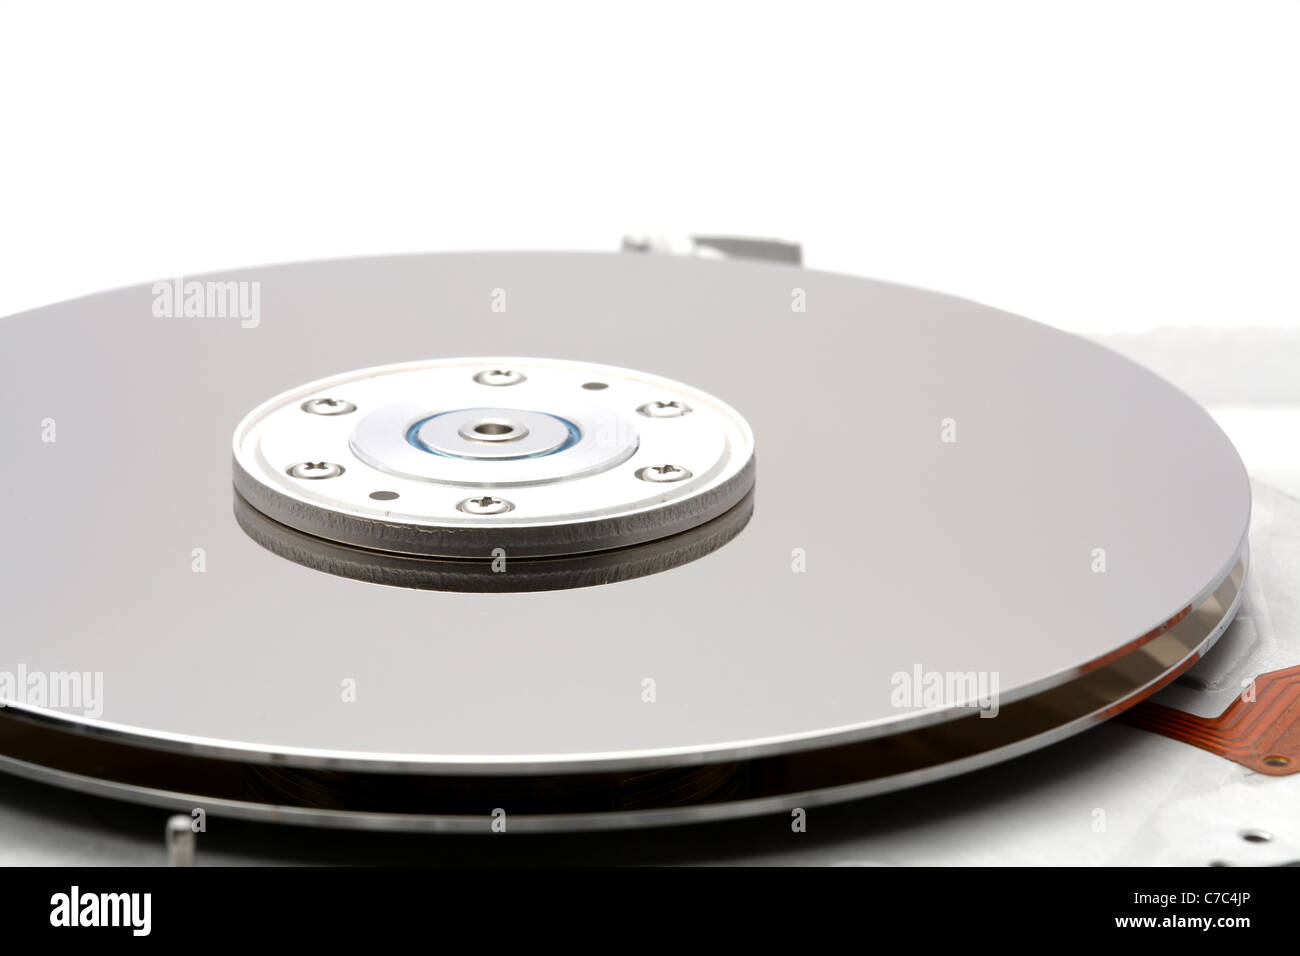 Hard disk drives platters. Stock Photo